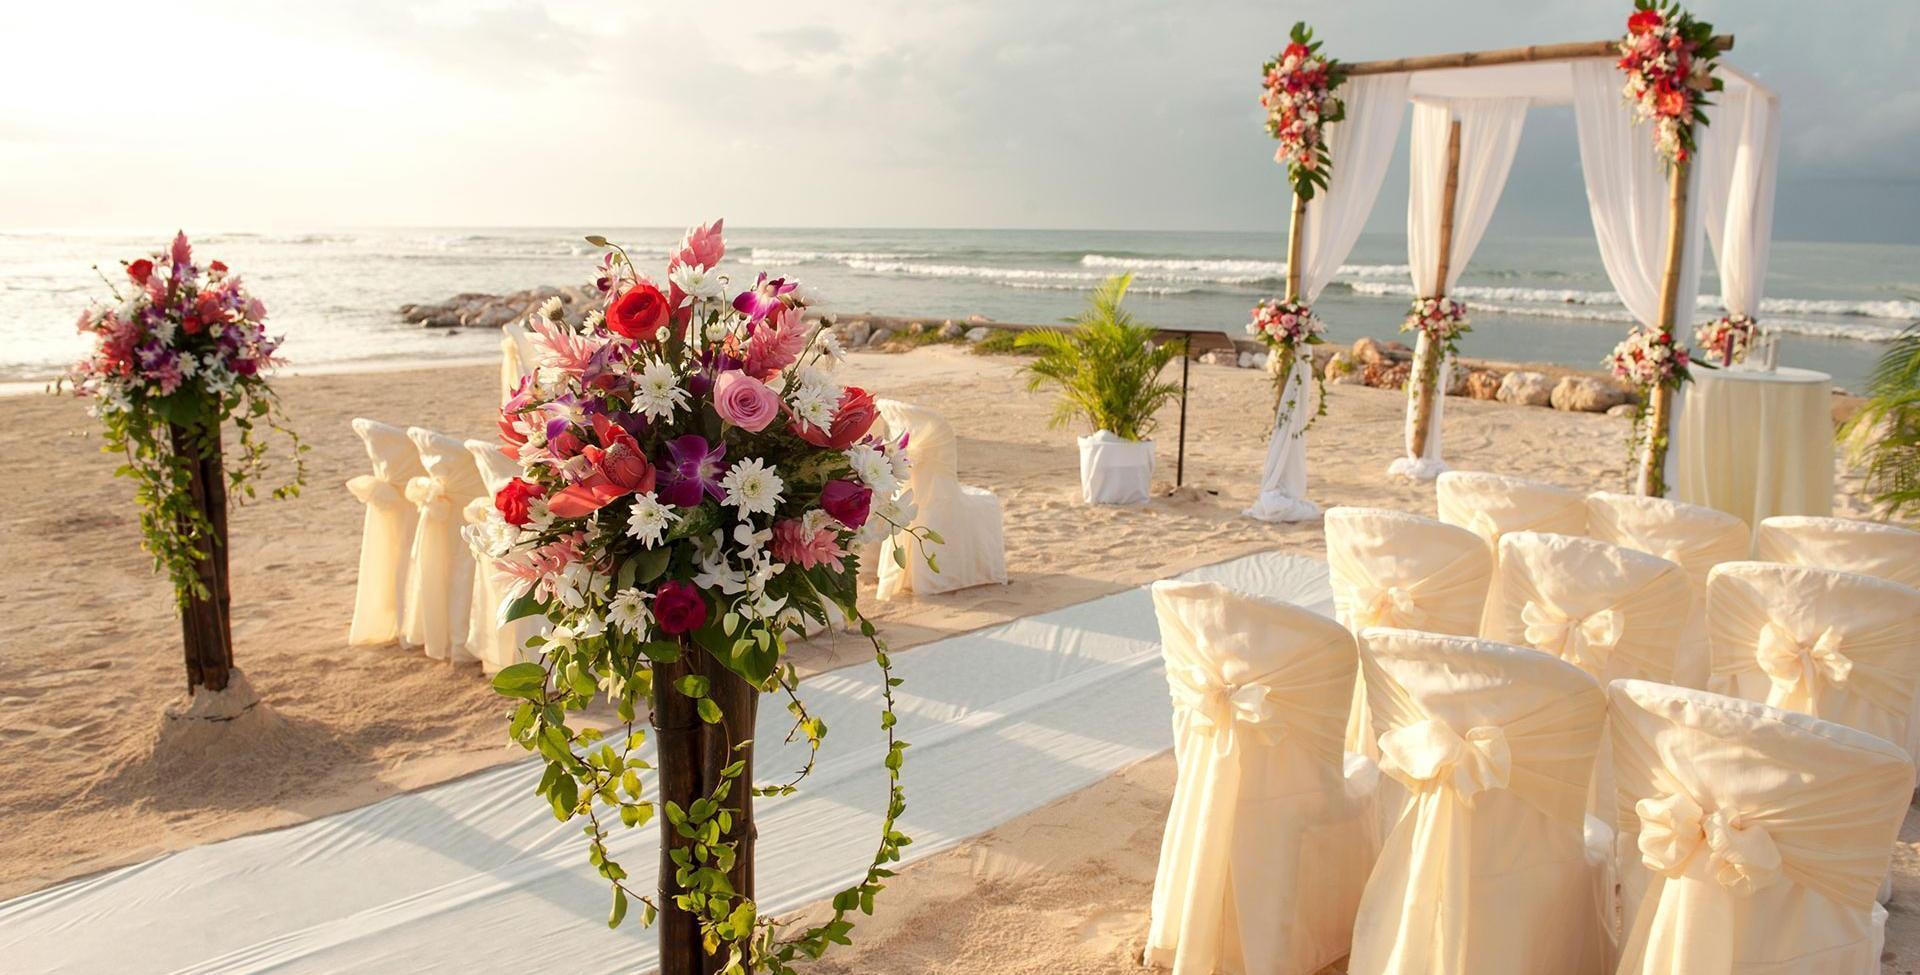 A wedding set up on a beach